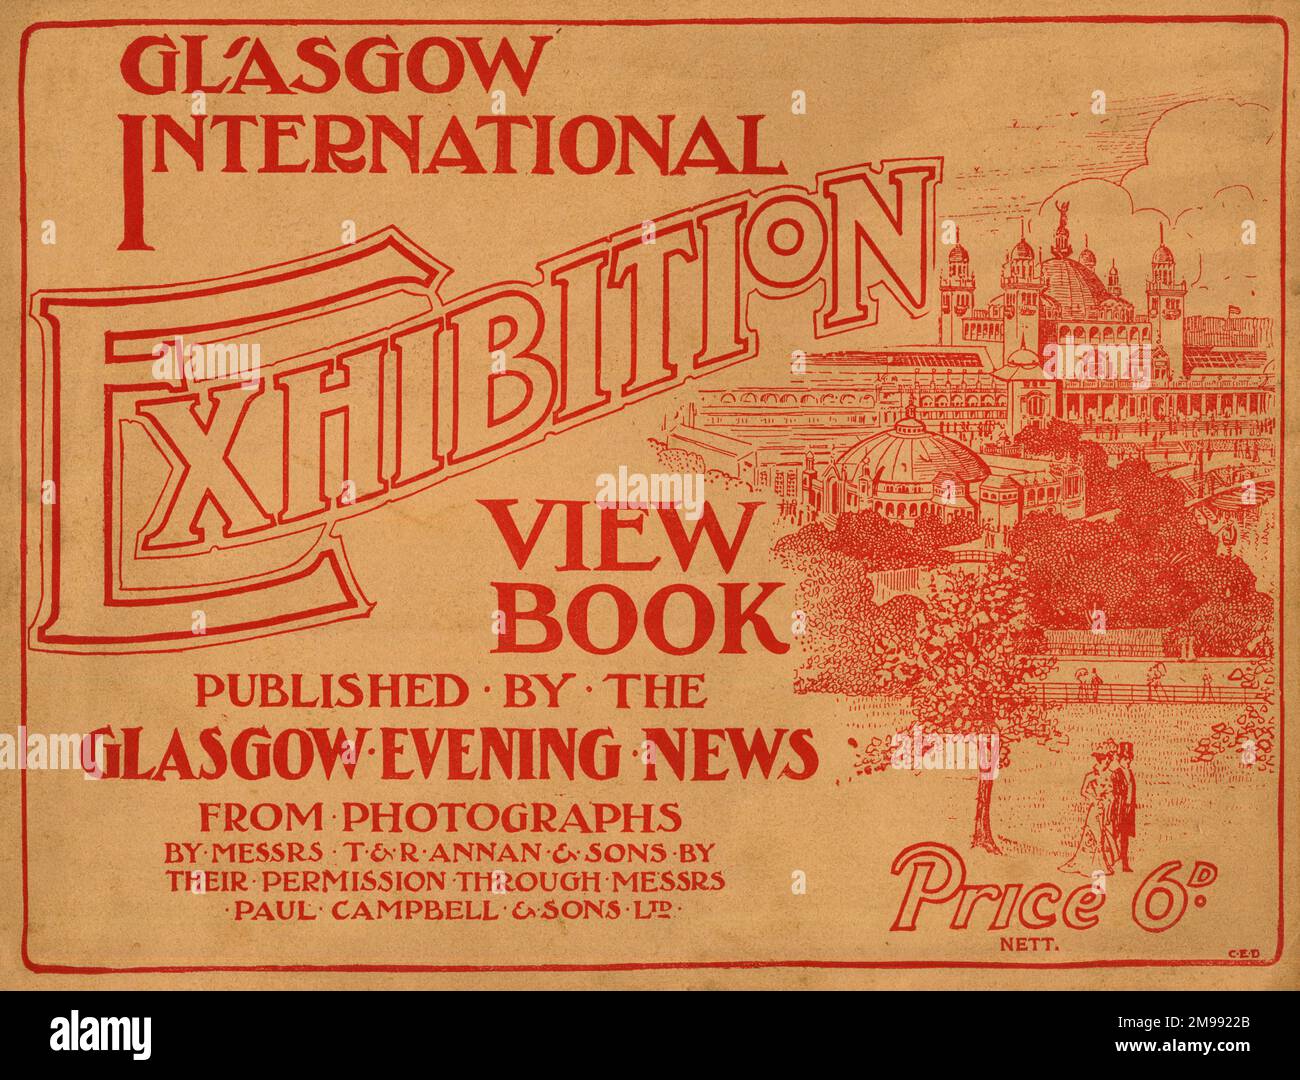 Glasgow International Exhibition, 1901 - Cover design of View Book pubblicato da The Glasgow Evening News. Foto Stock